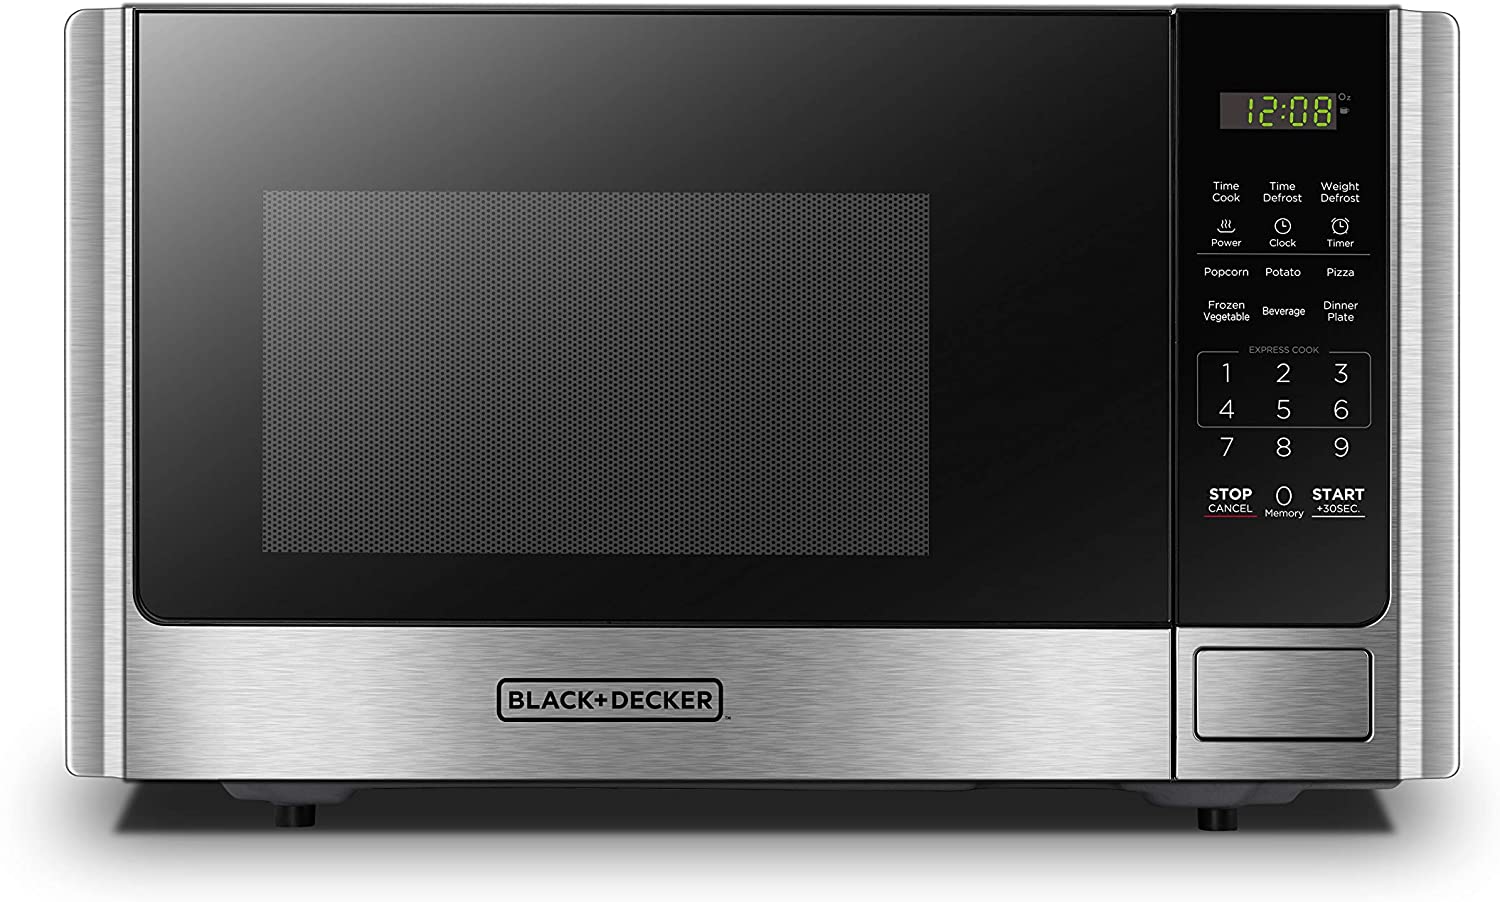 BLACK+DECKER Pre-Programmed LED Countertop Microwave